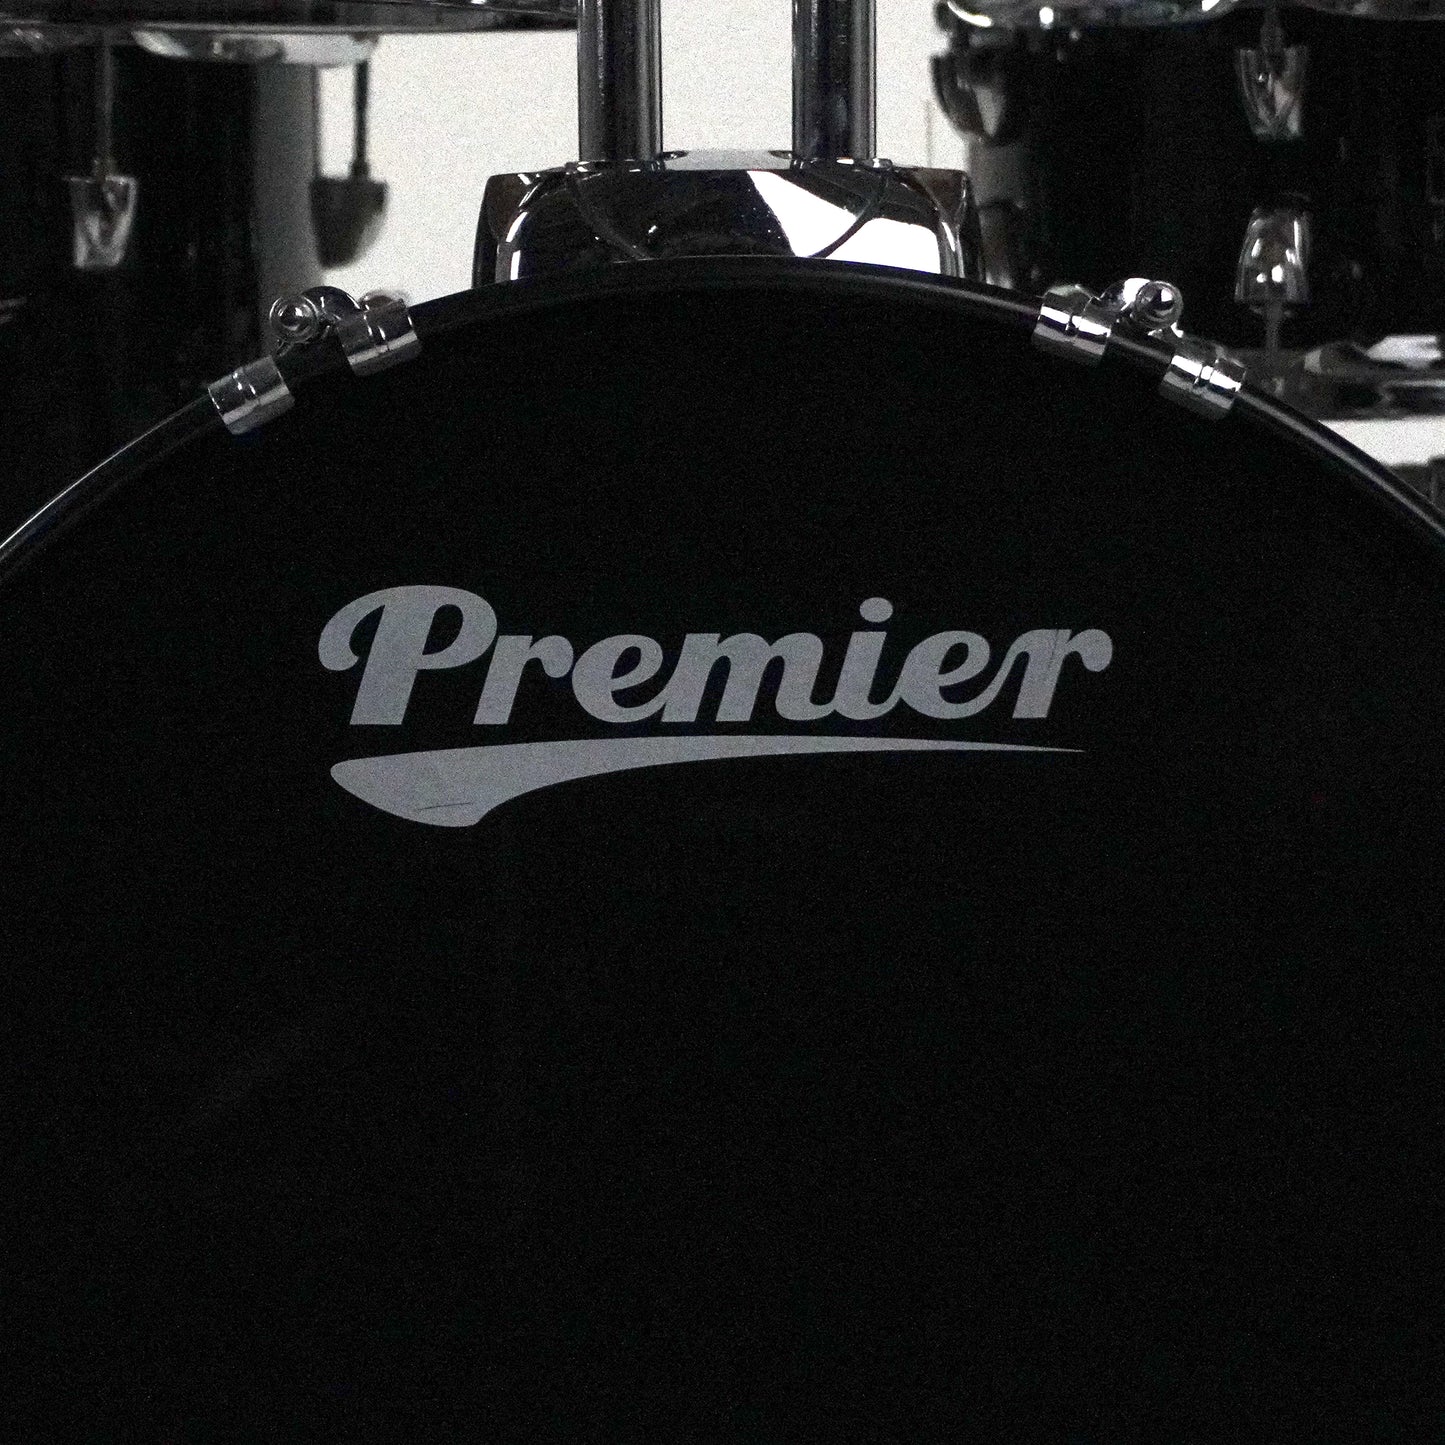 Premier Olympic 5-Piece Drum Kit in Black 20,12,12,14